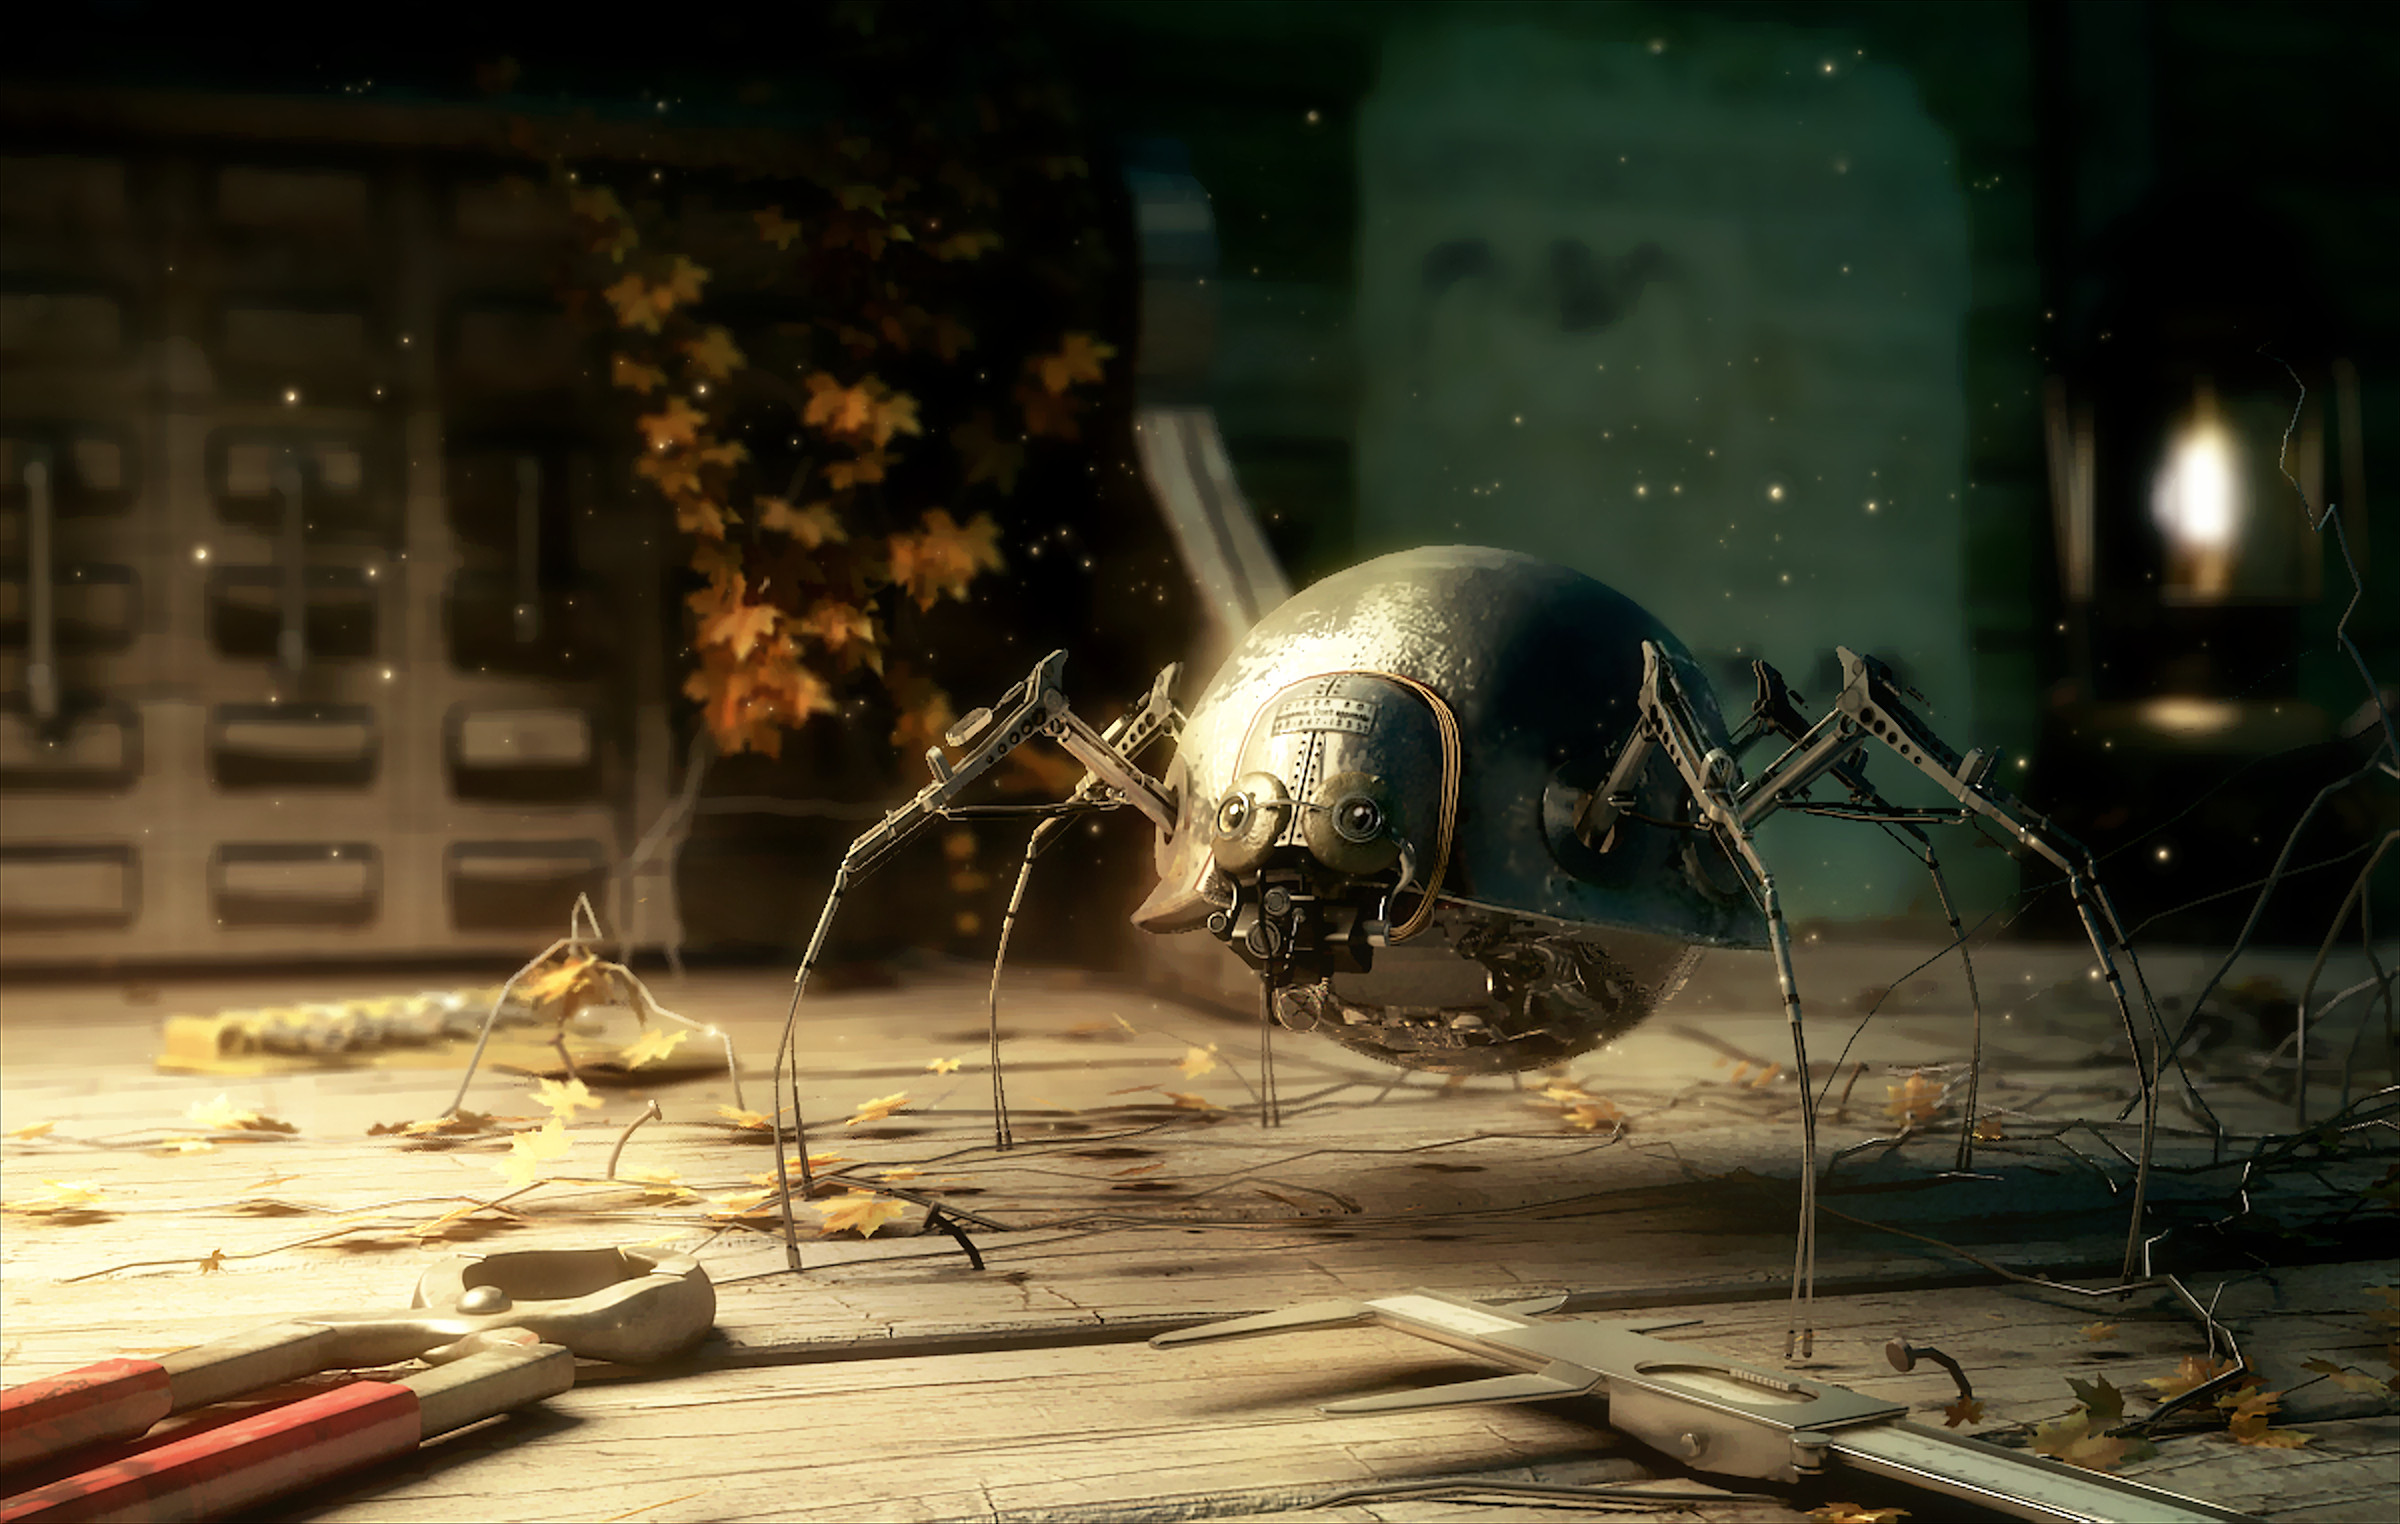 Spider Robot by Adrien Lambert